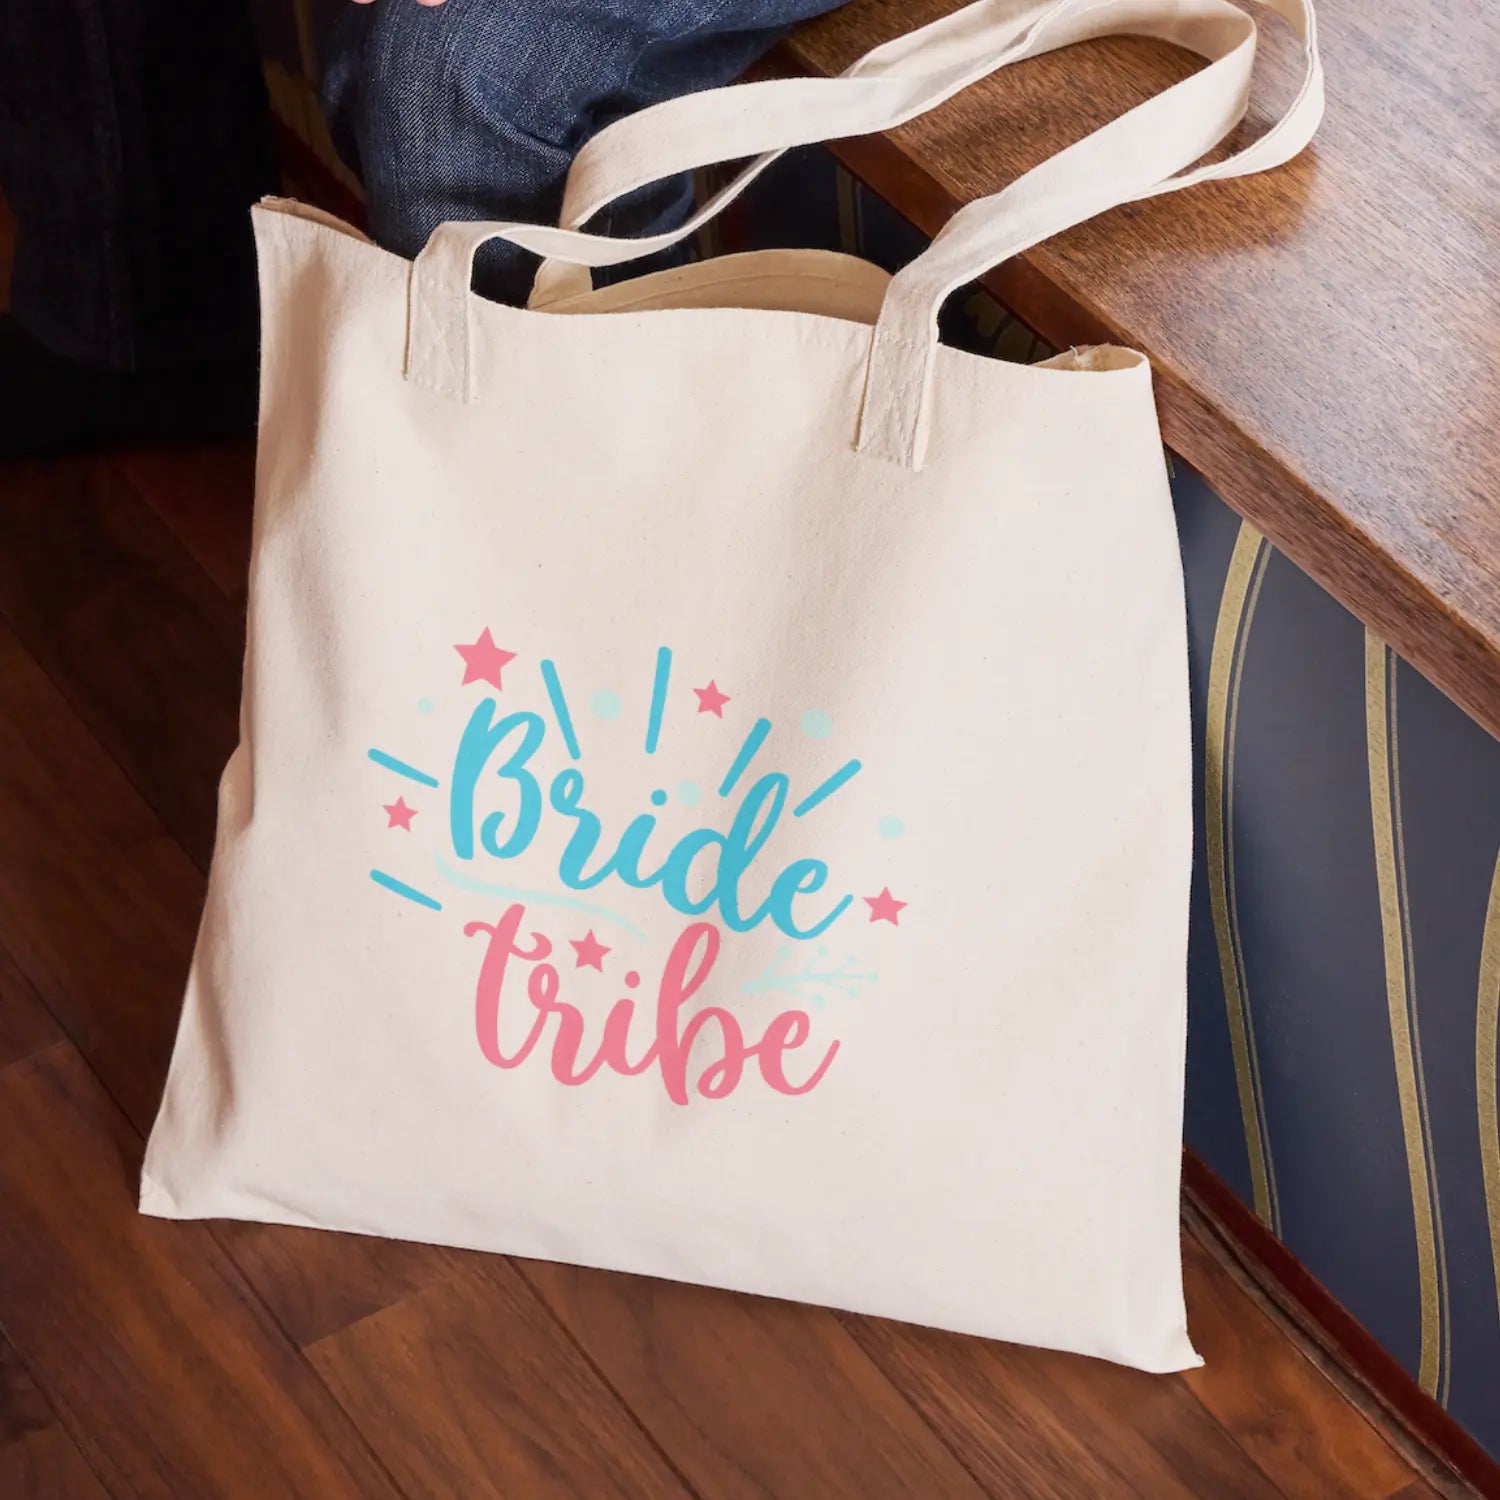 Bride tribe SVG | Digital Download | Cut File | SVG Only The Sweet Stuff